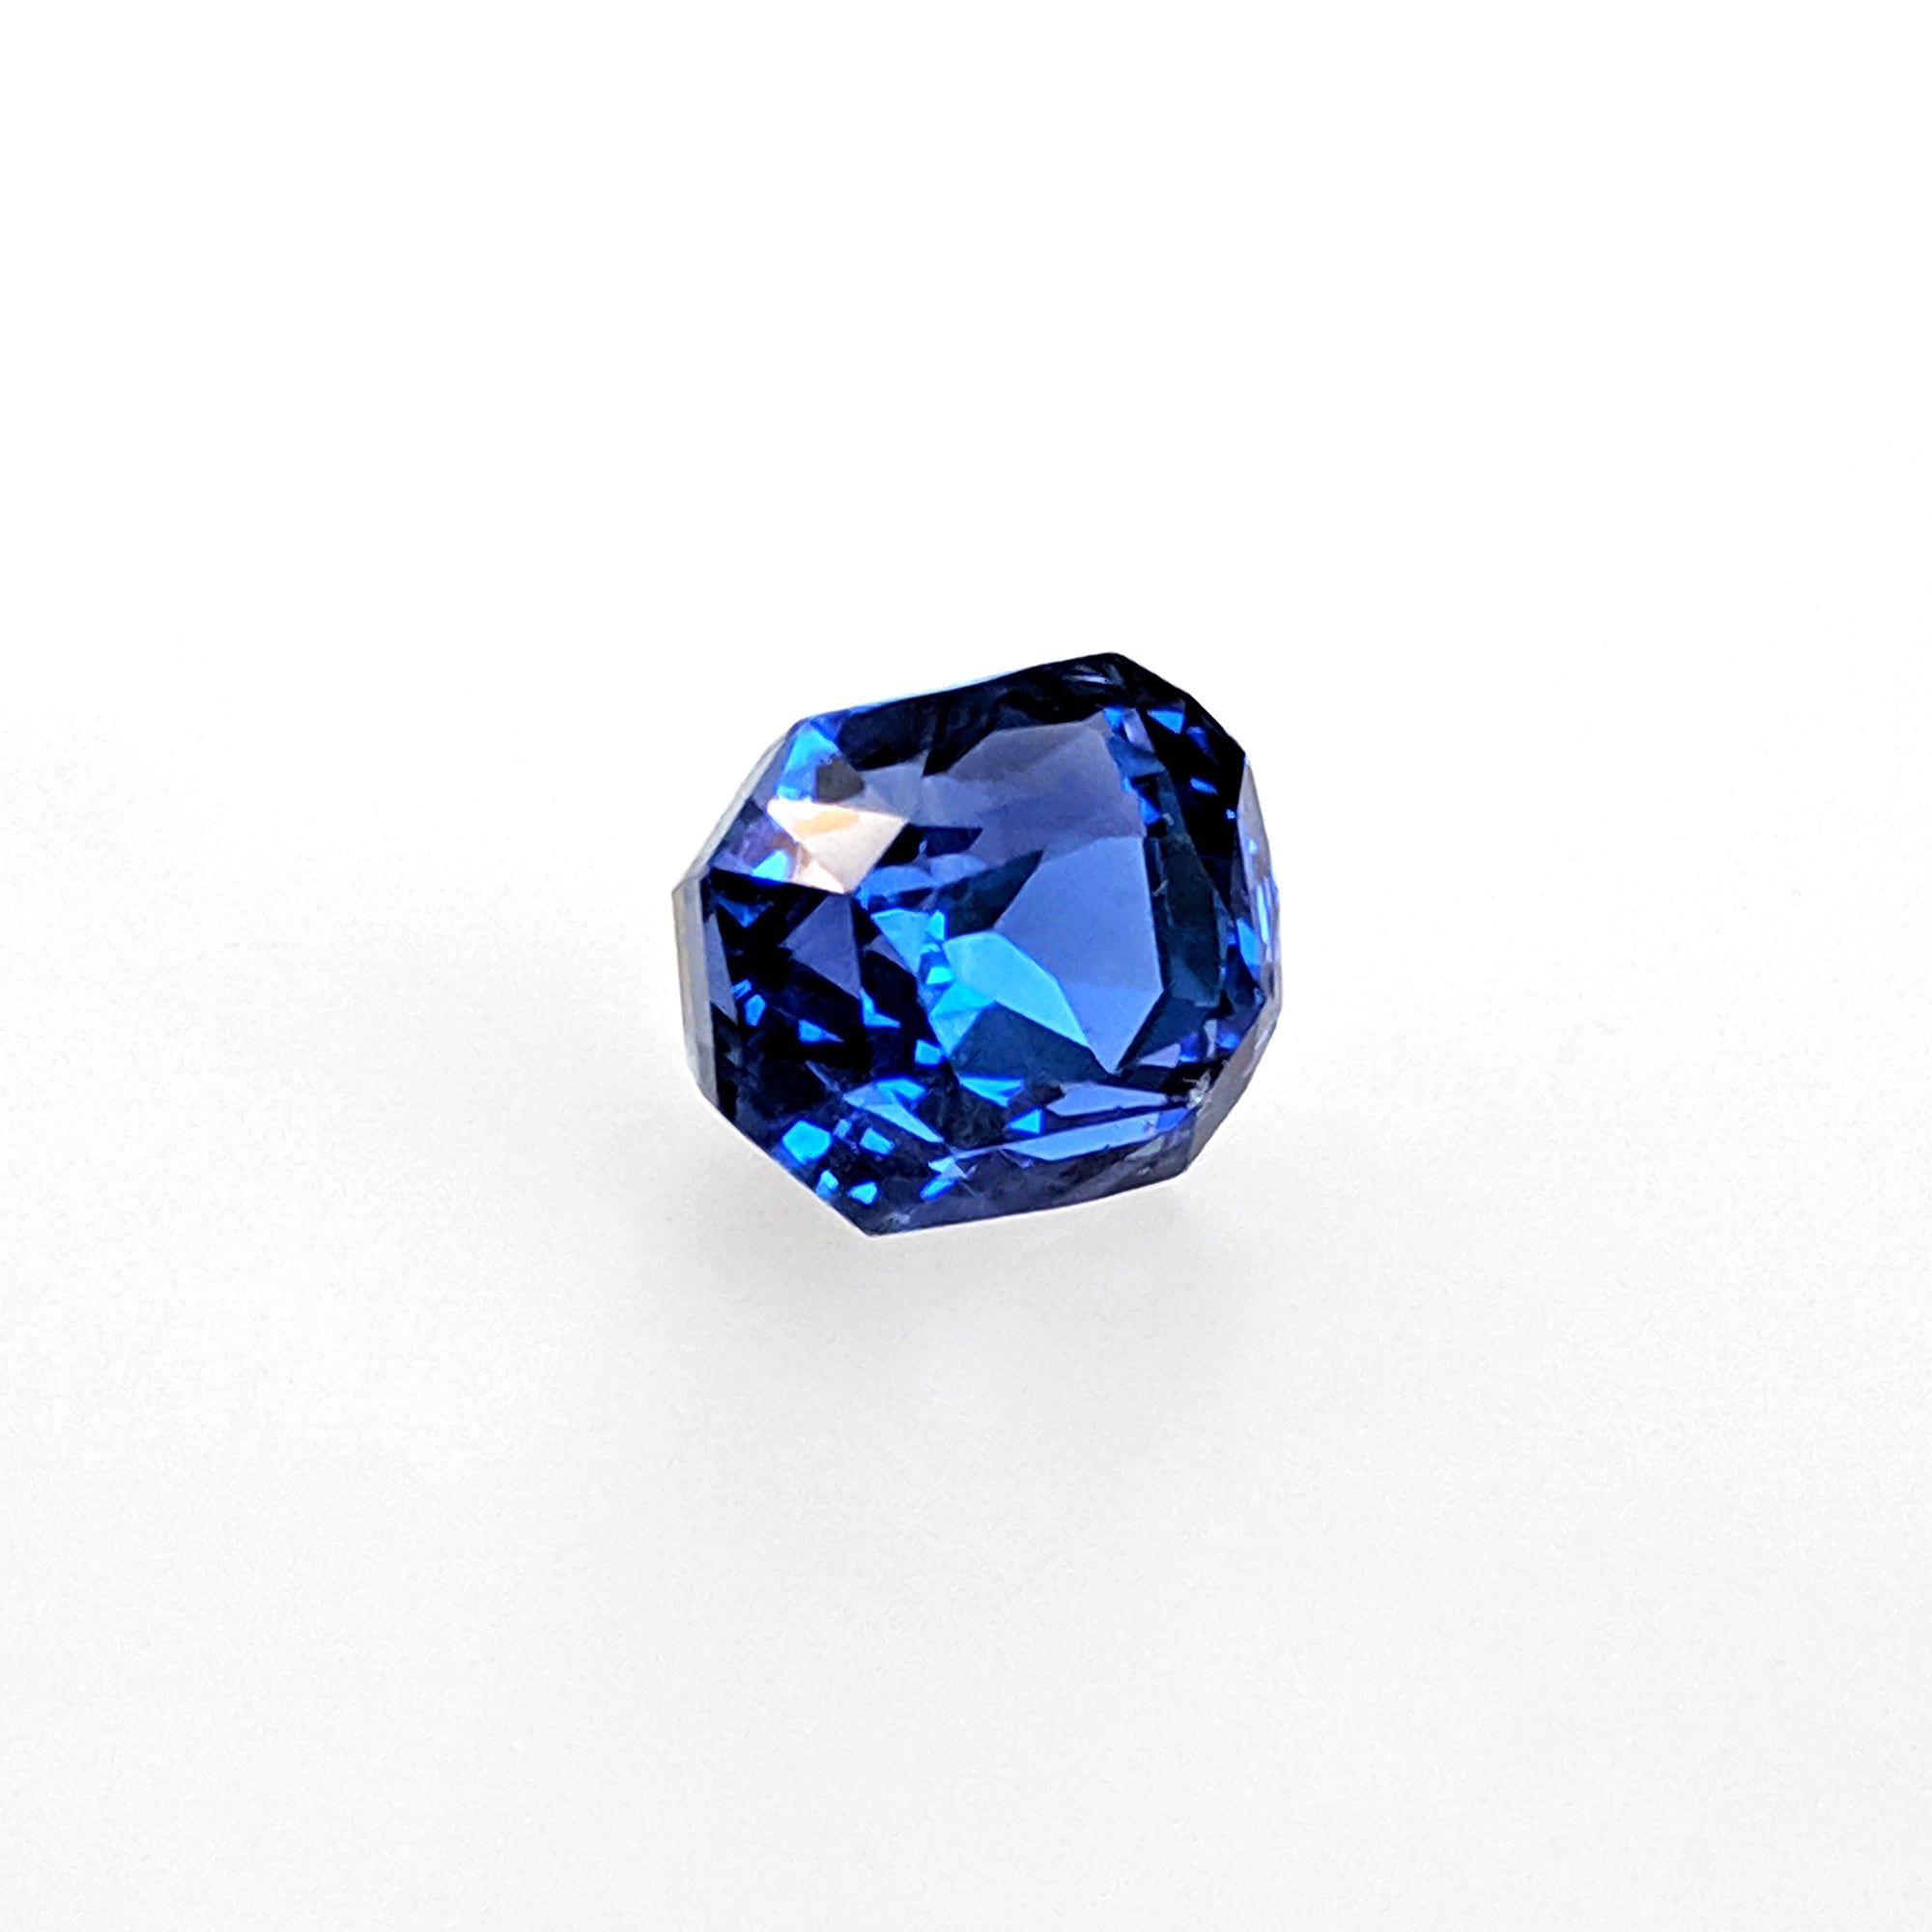 3.19 Carat Blue Sapphire